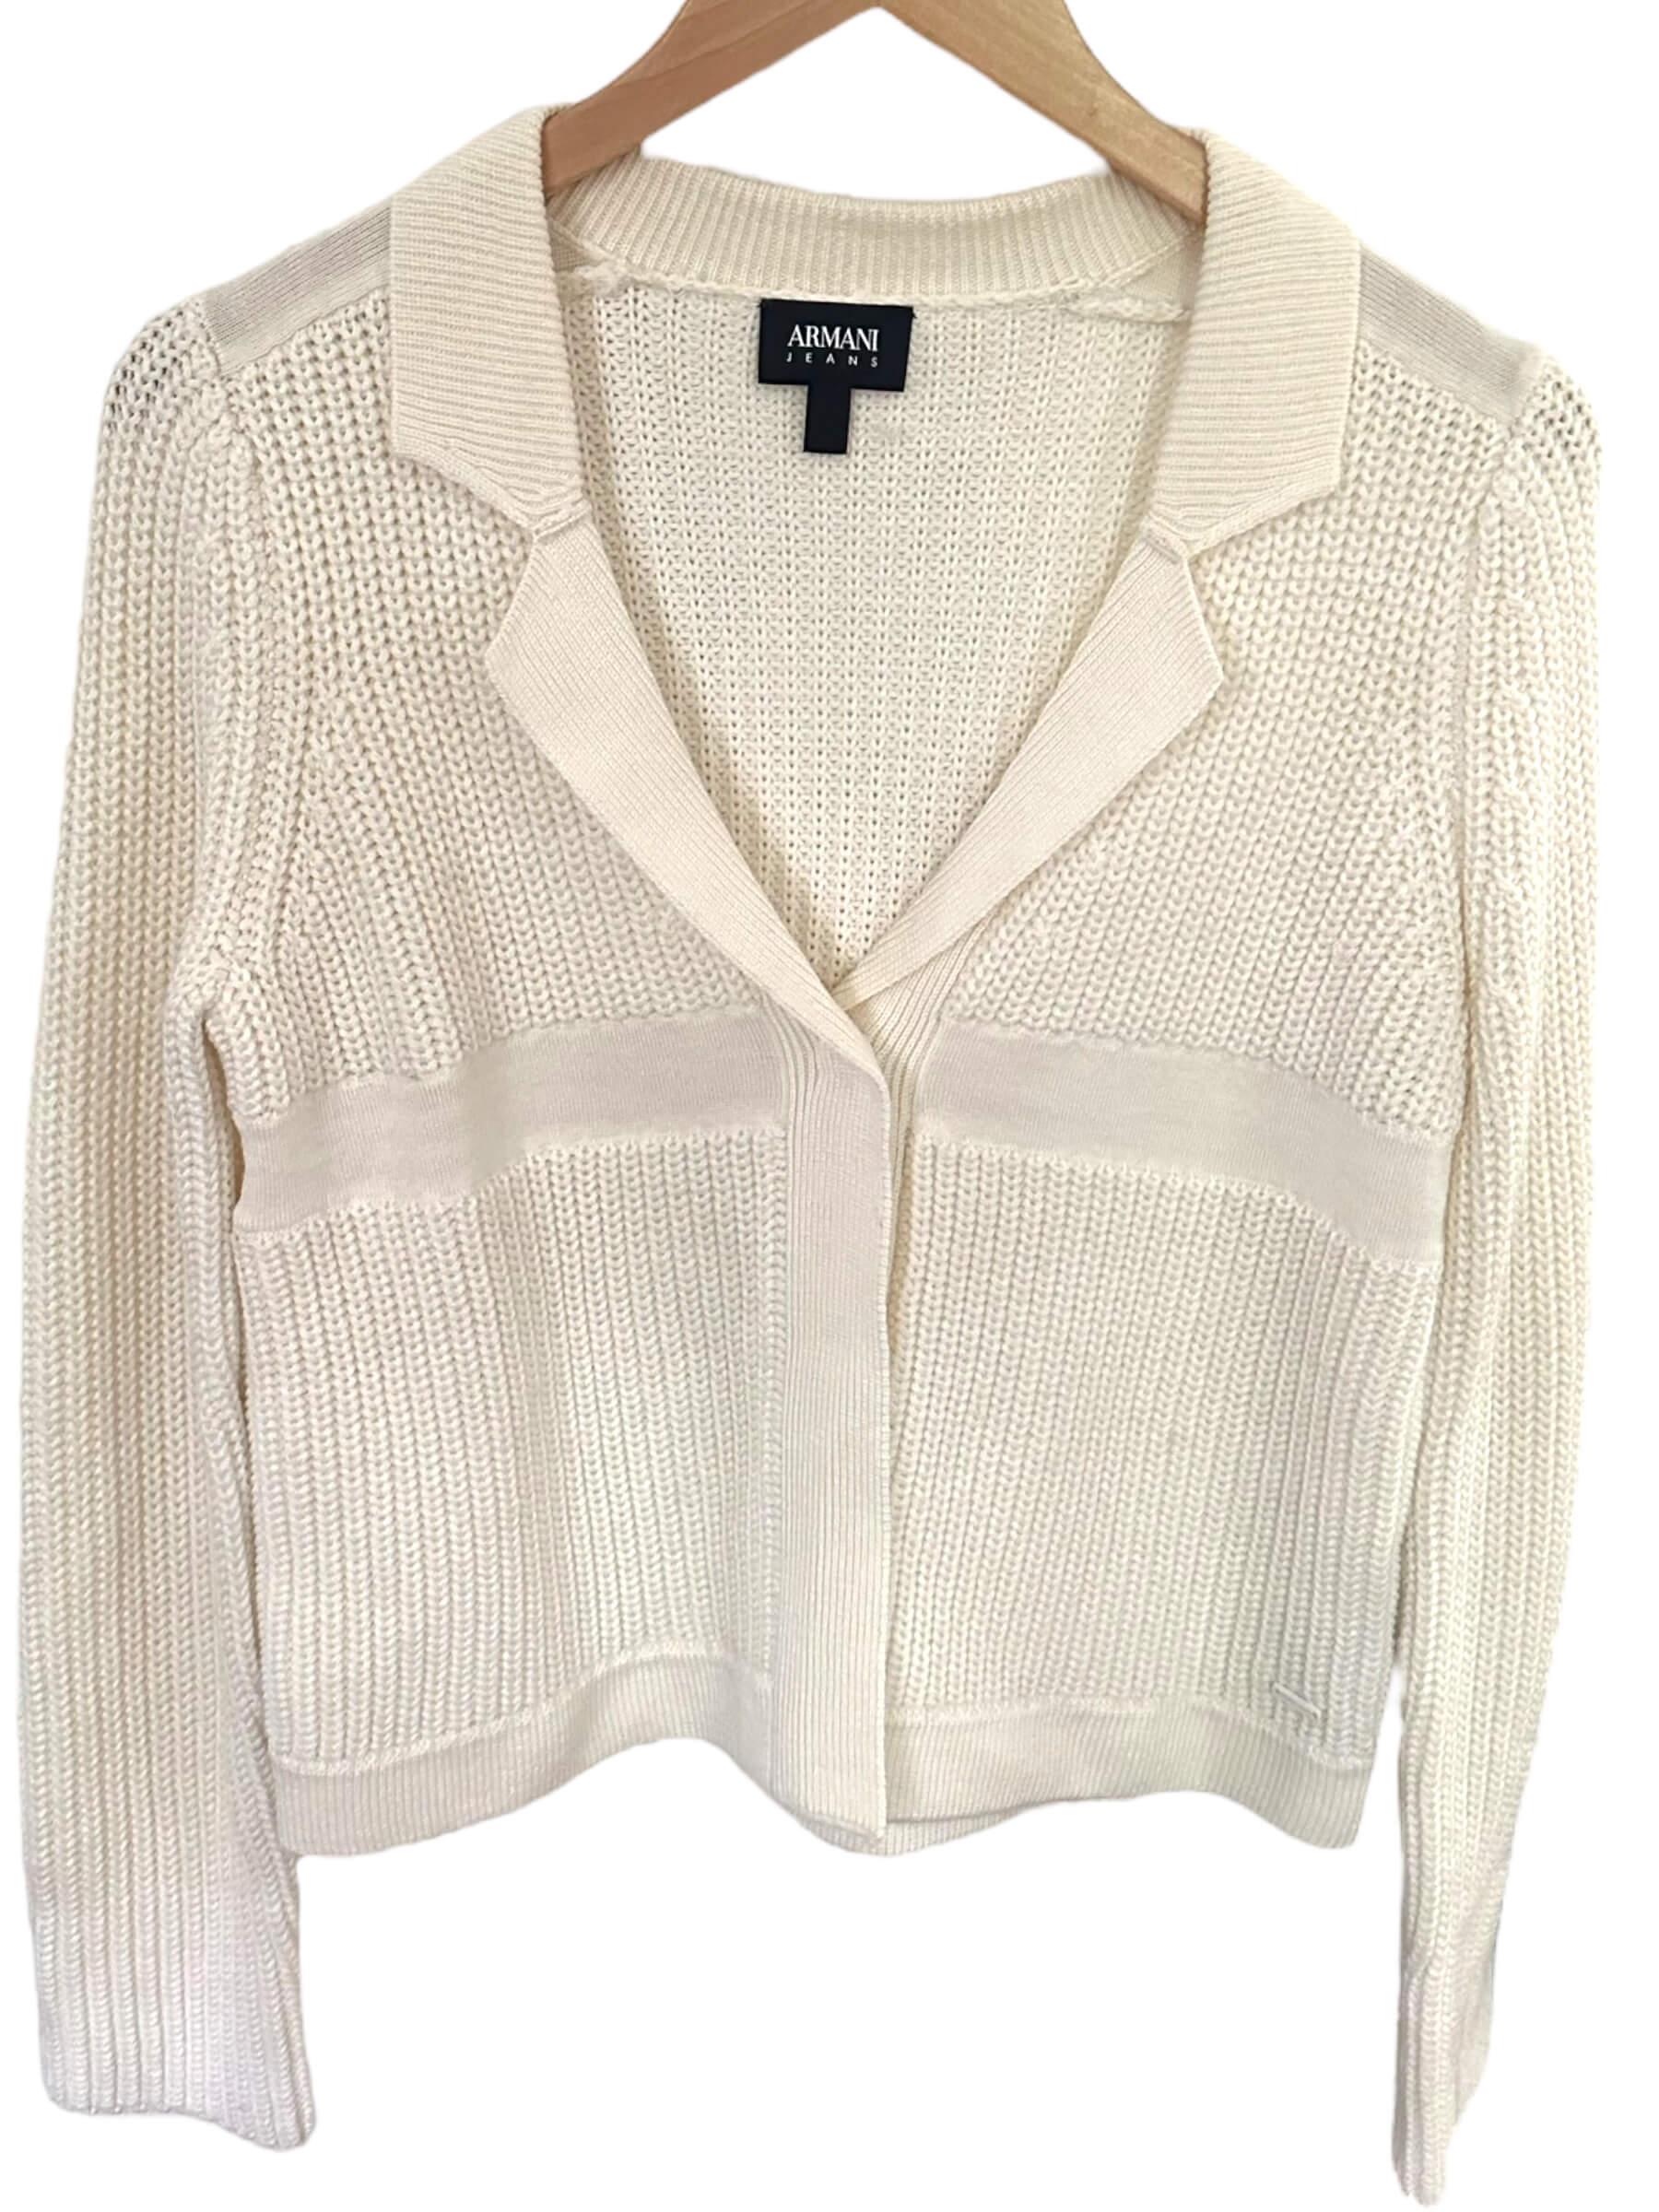 Light Spring ARMANI warmstone white ivory sweater jacket